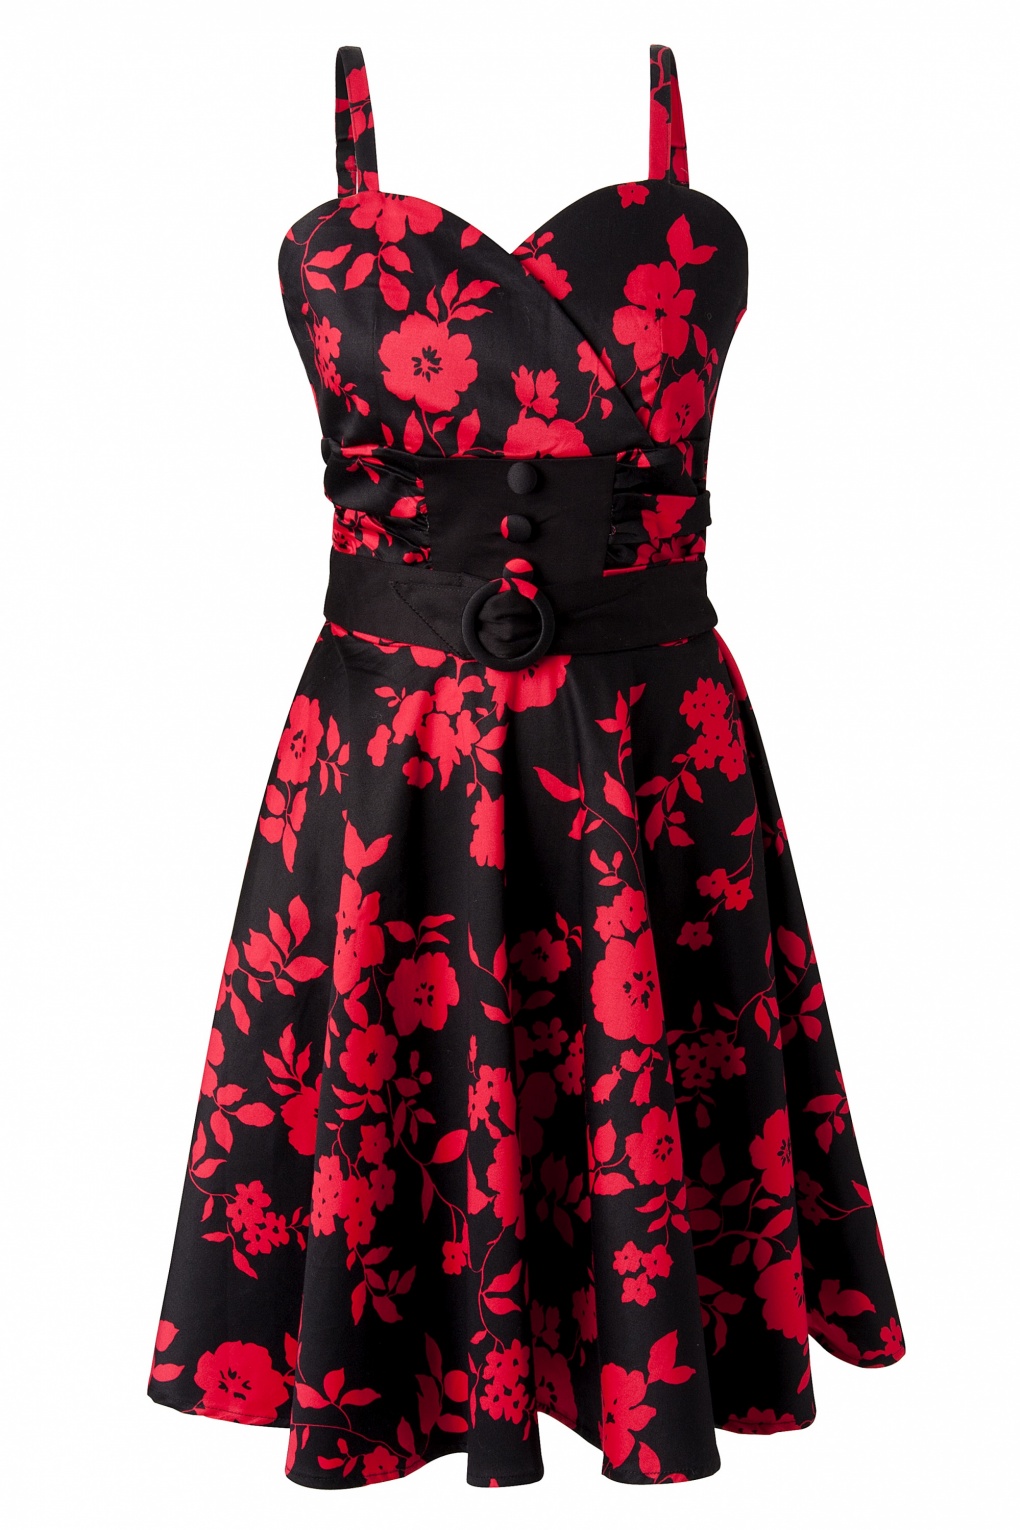 50s Floral black red swing dress